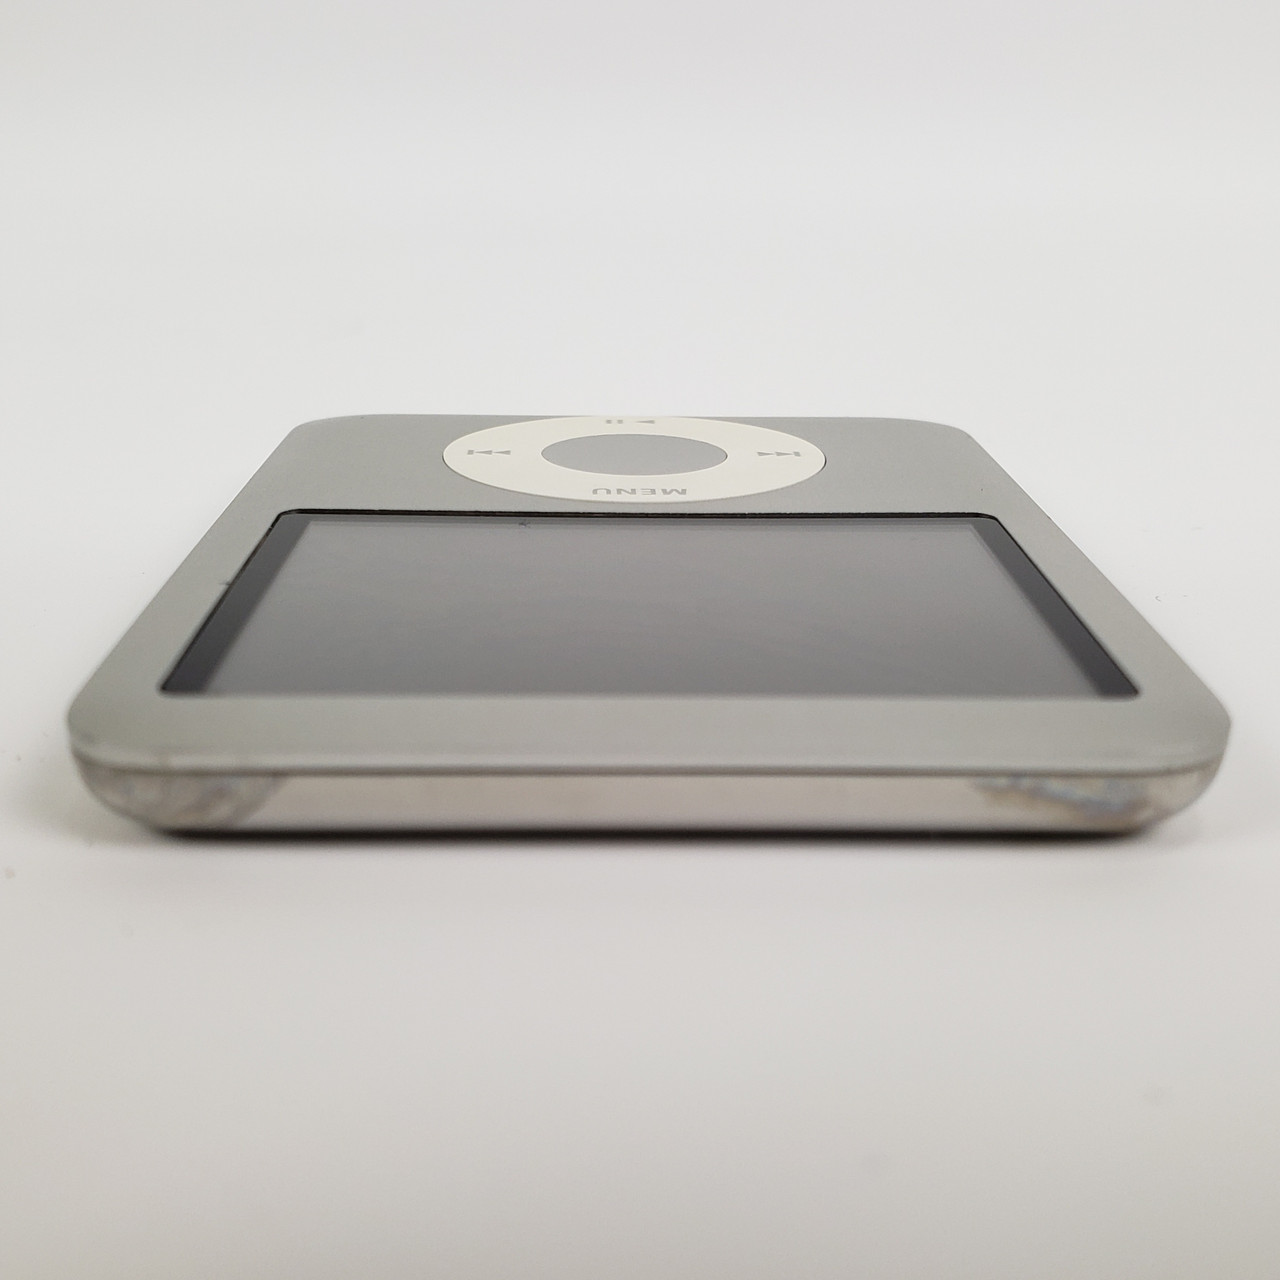 Apple A1236 (3rd Gen) Silver 4GB iPod Nano | Grade B